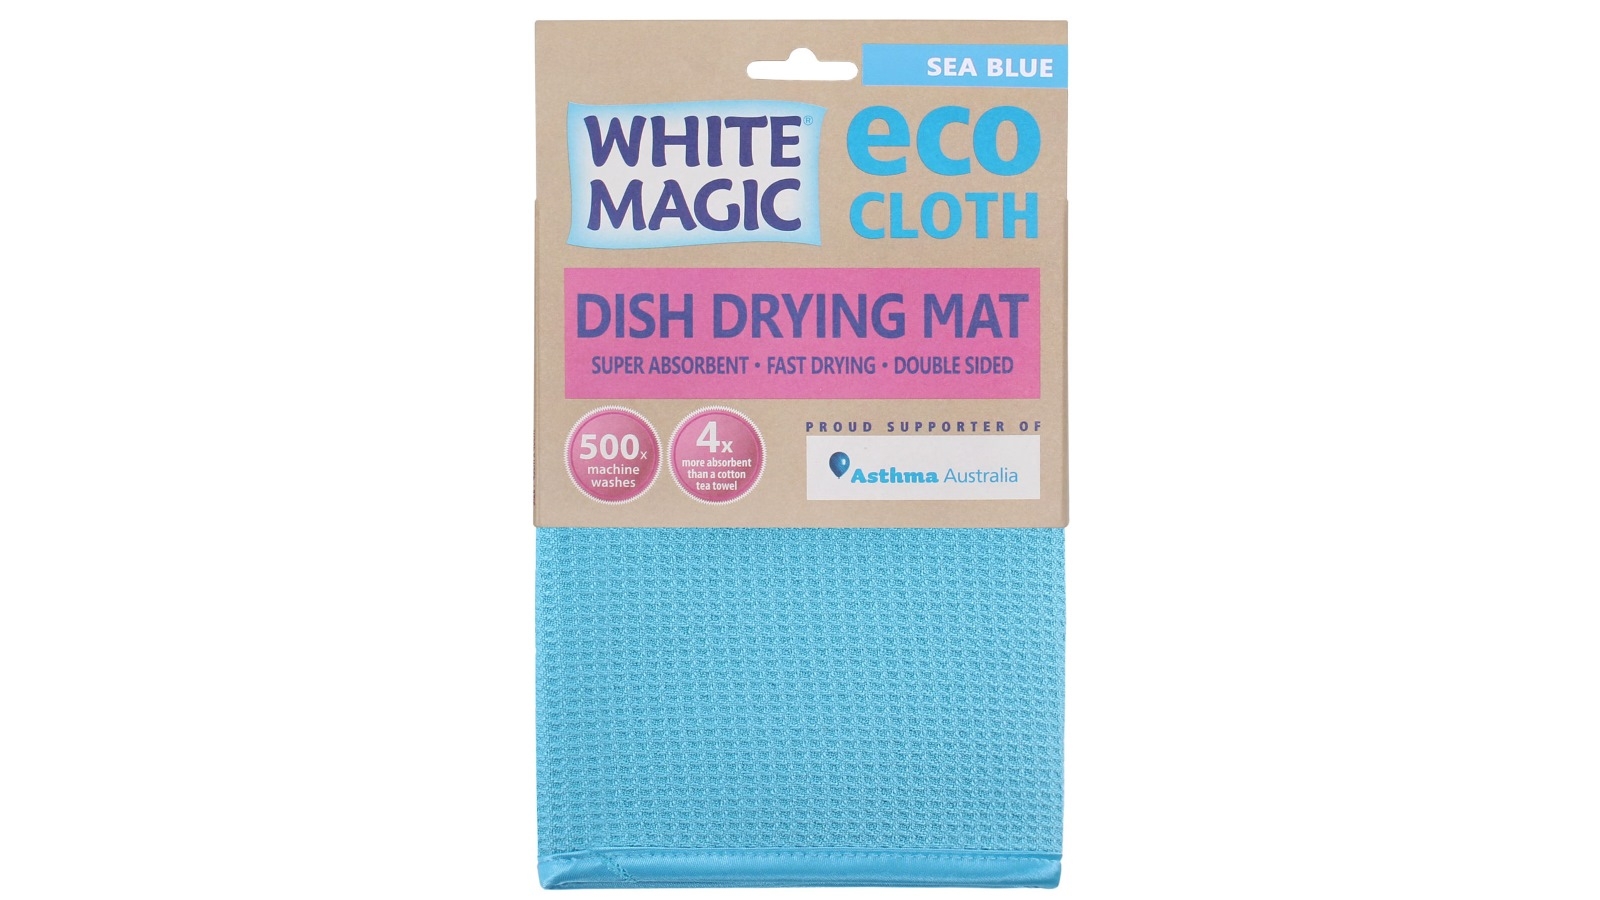 Dish Drying Mat Dish Drying Mat - White Magic